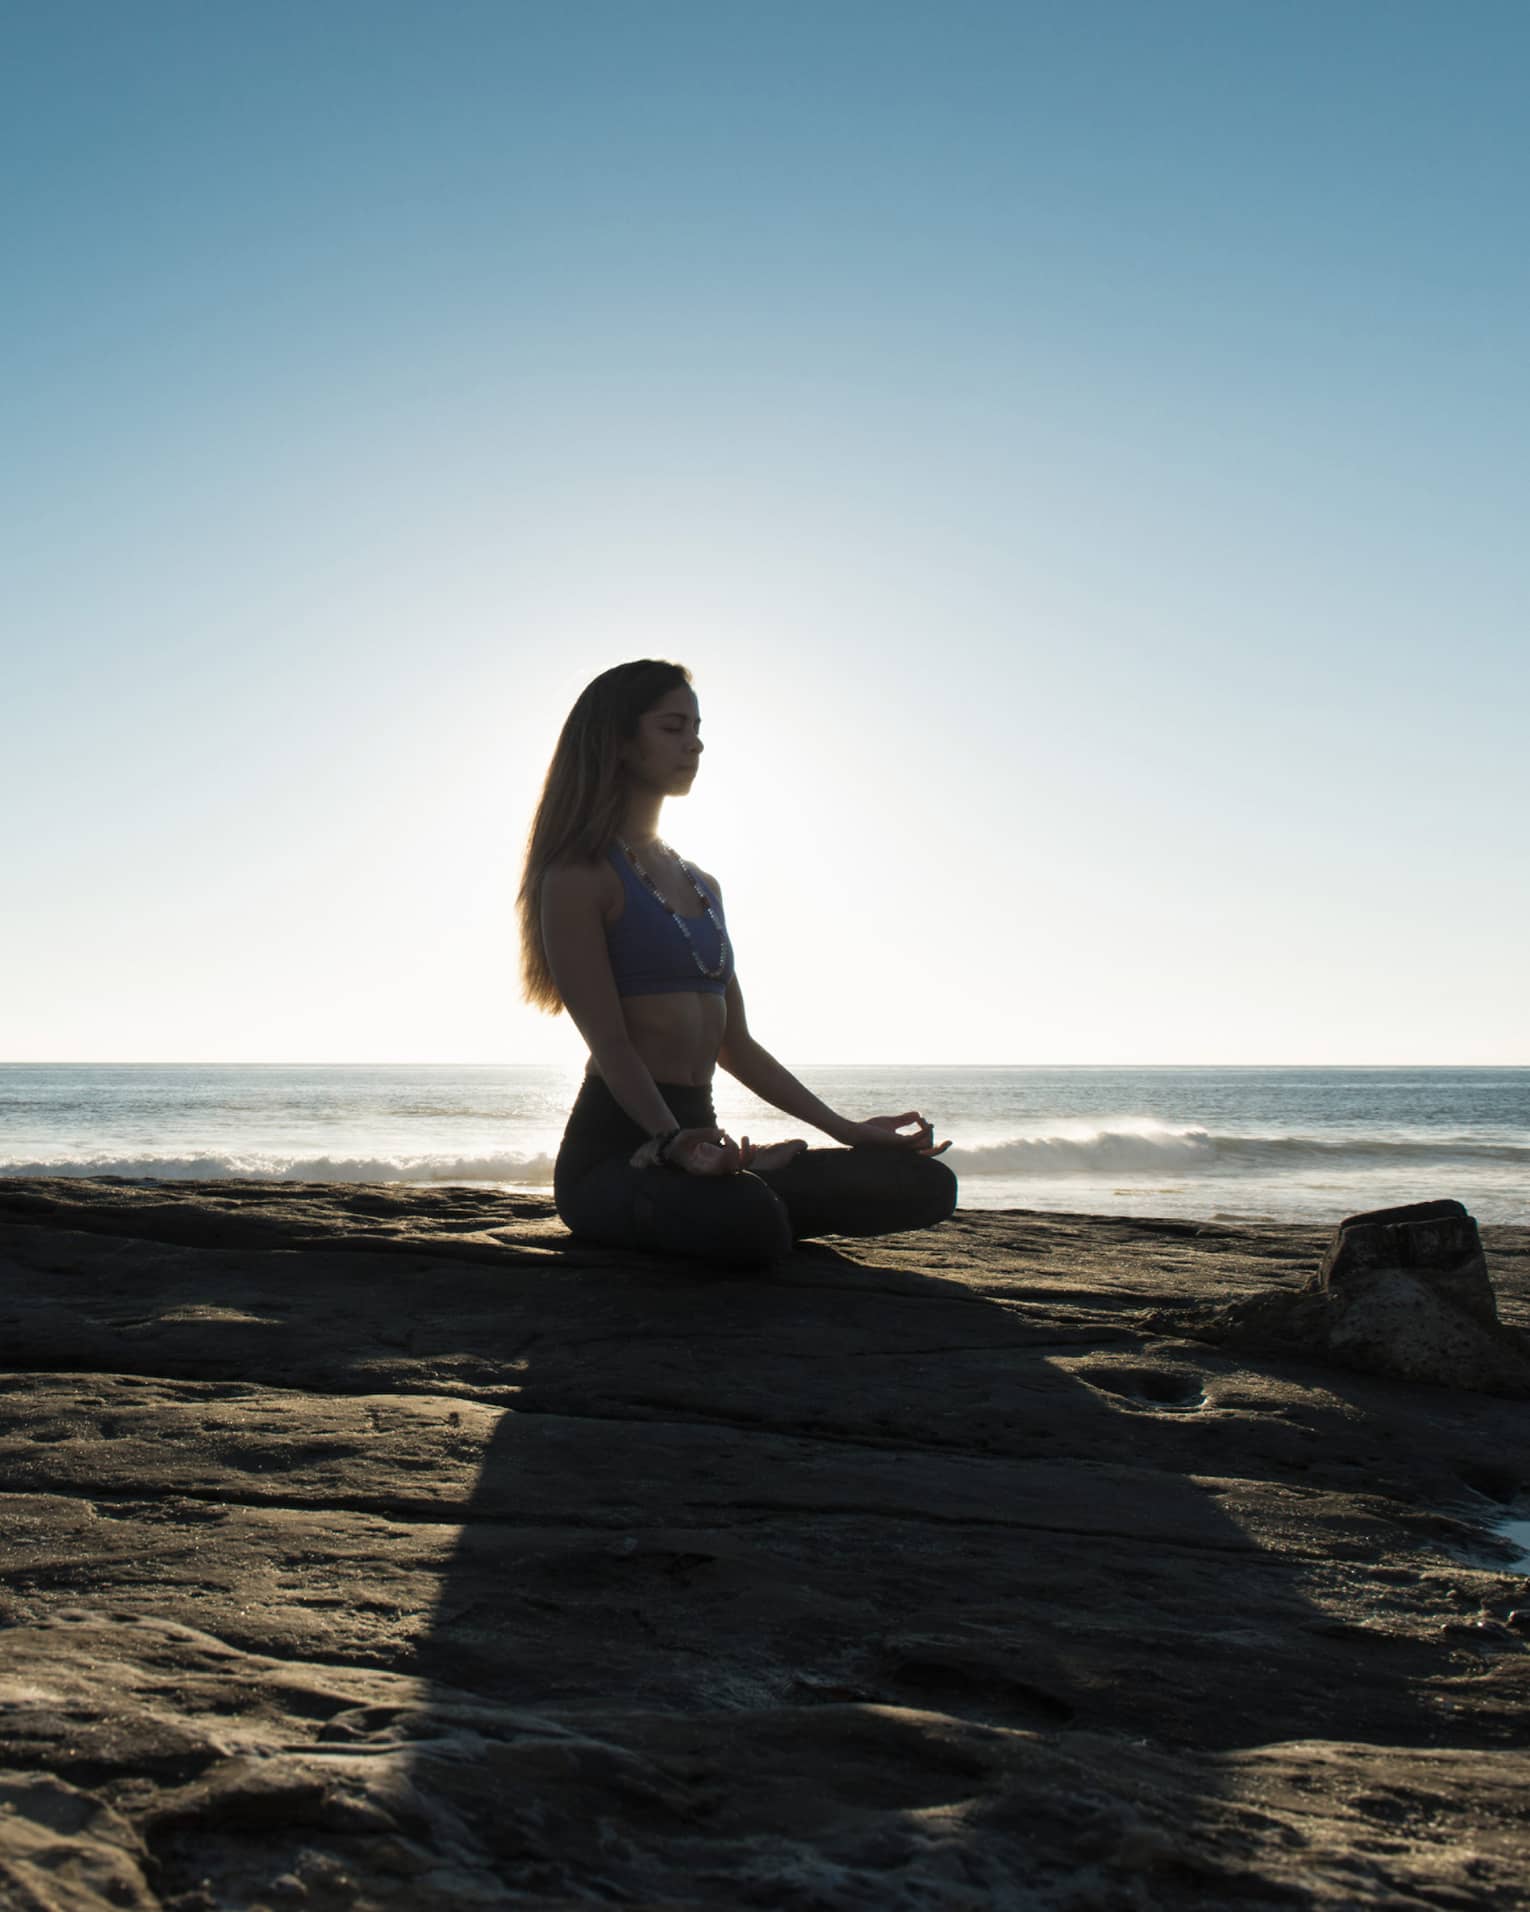 Silhouette of woman sitting cross-legged, meditating on rock by ocean